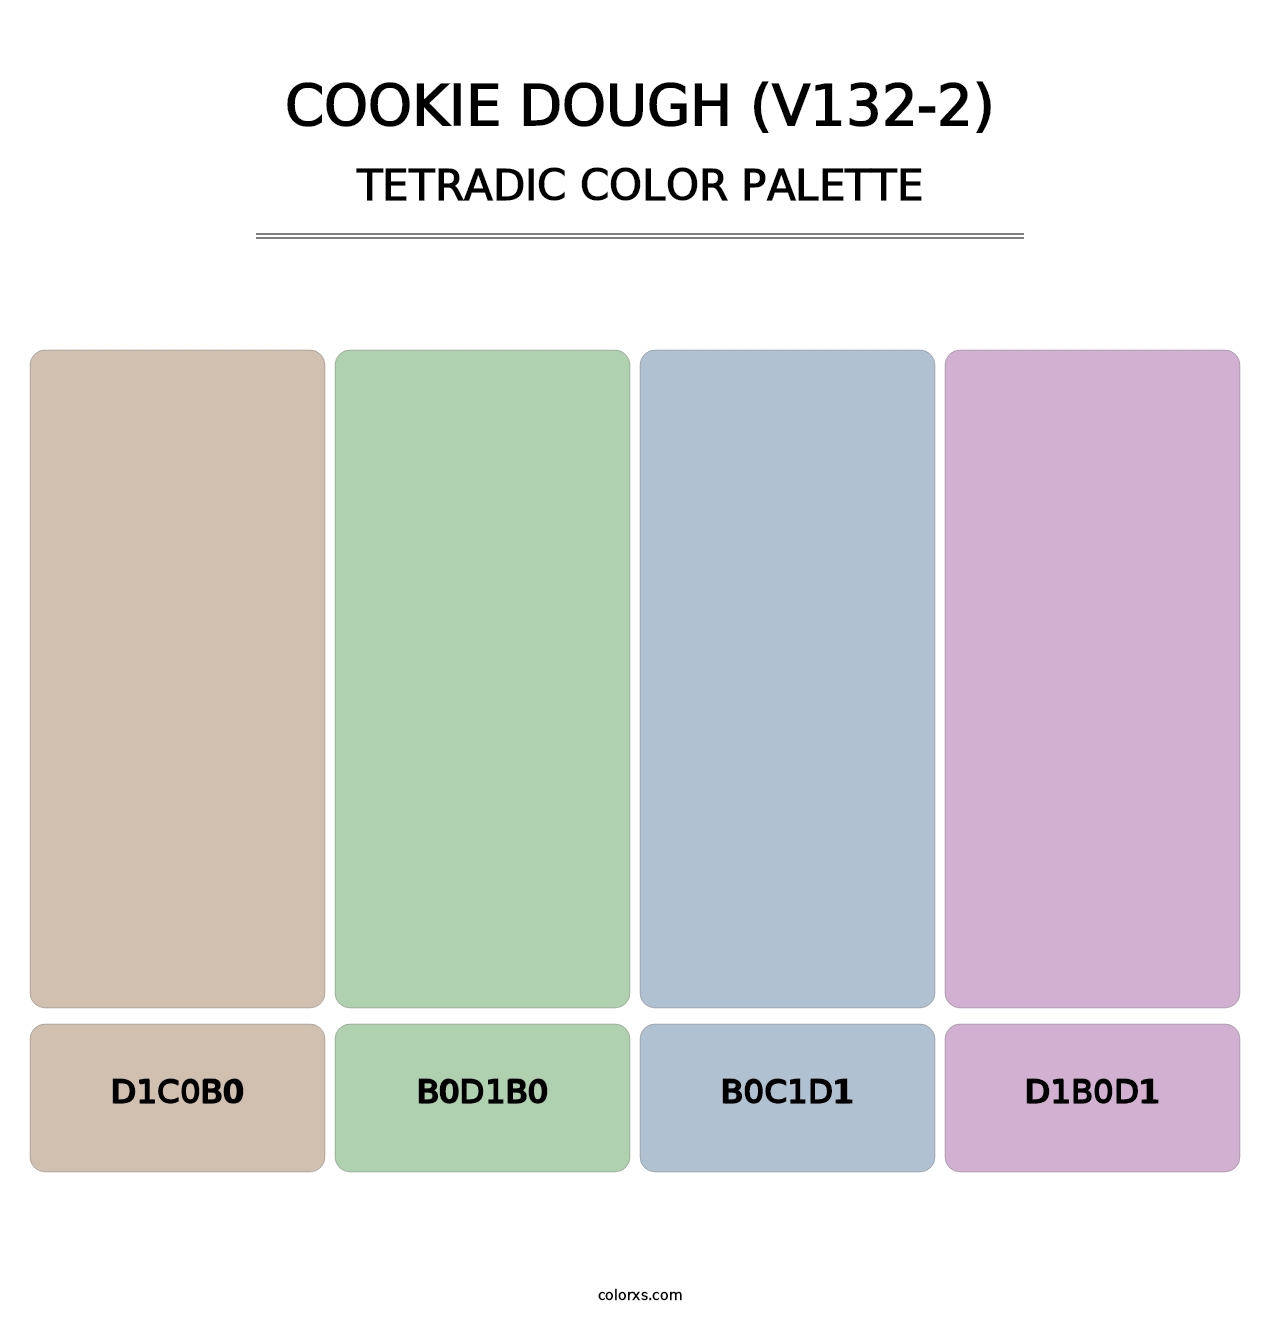 Cookie Dough (V132-2) - Tetradic Color Palette